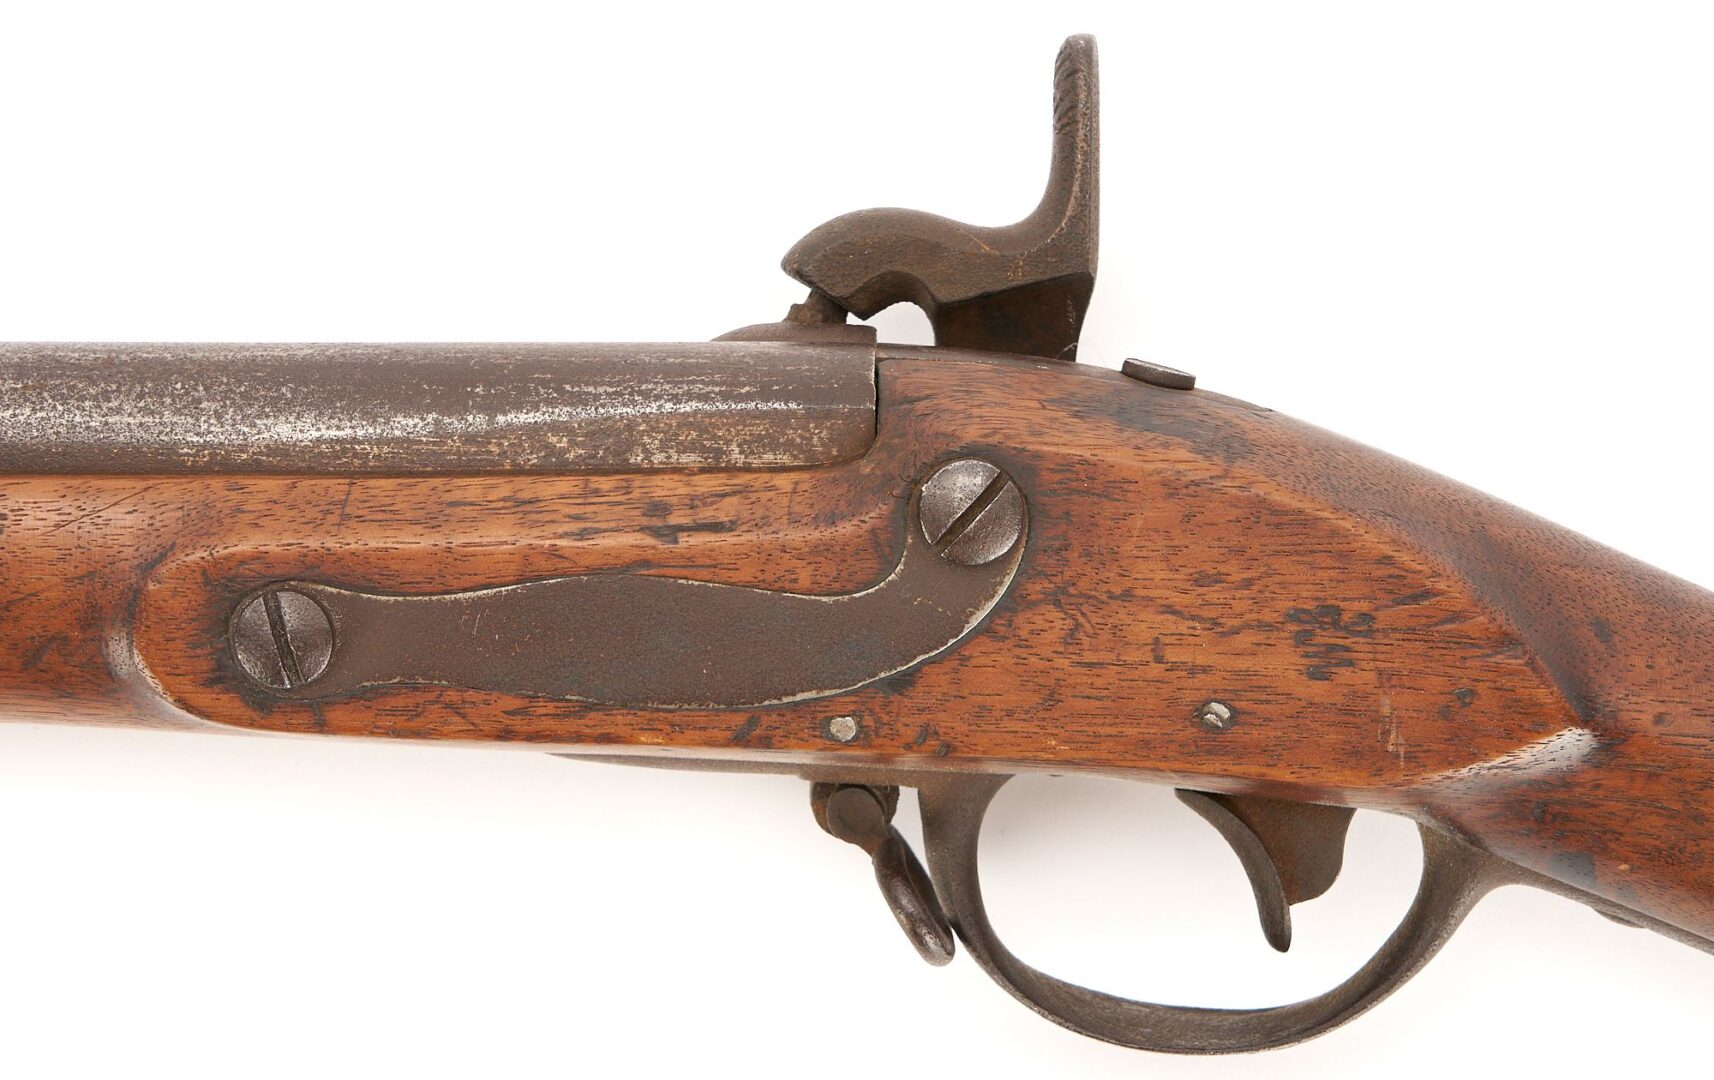 Lot 546: Pomeroy Model 1816 Musket, Percussion Conversion, w/ Bayonet